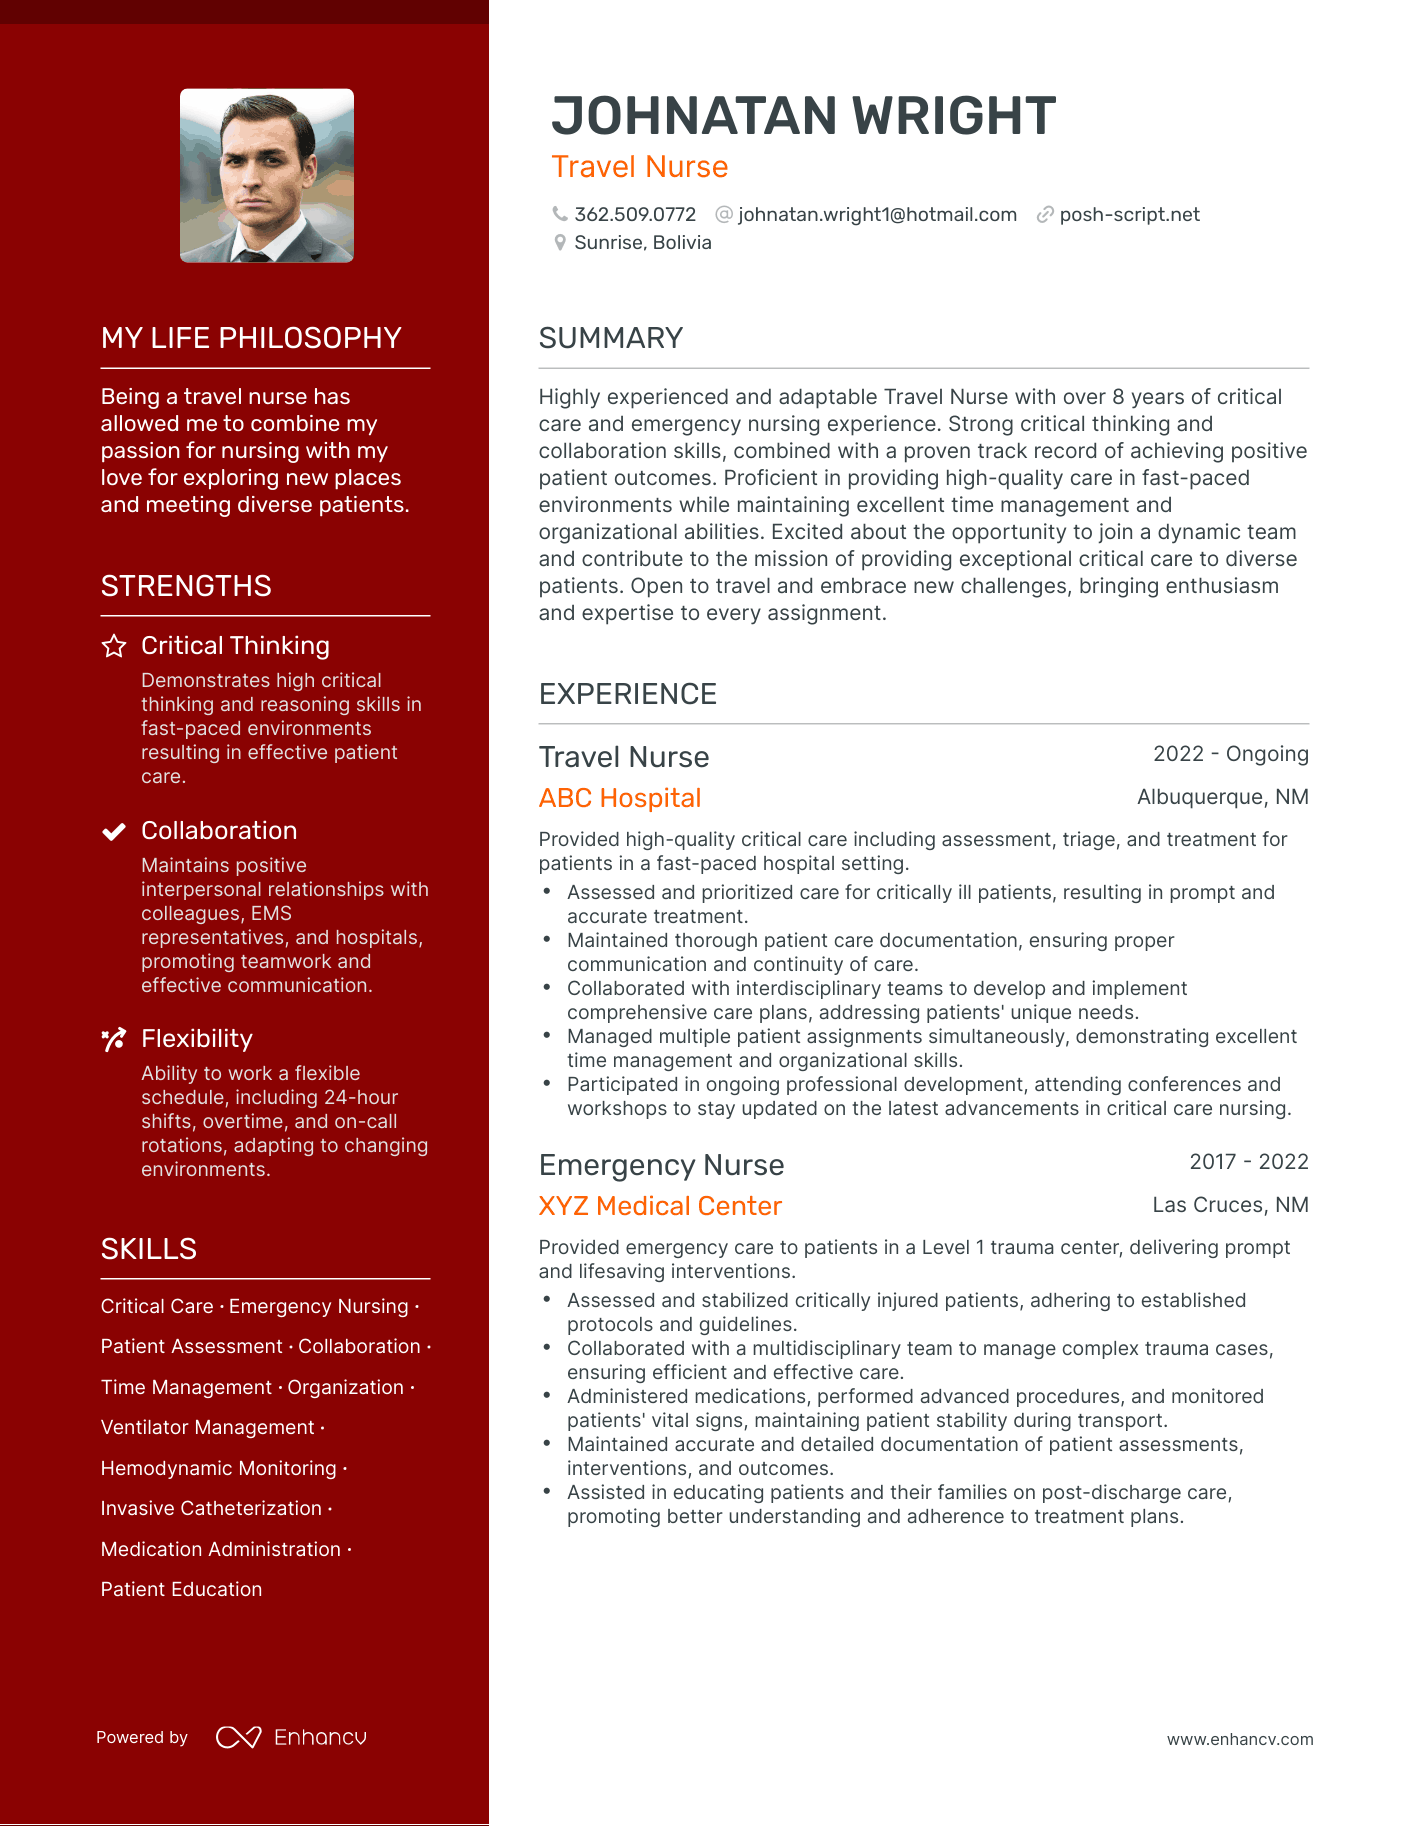 Travel Nurse resume example